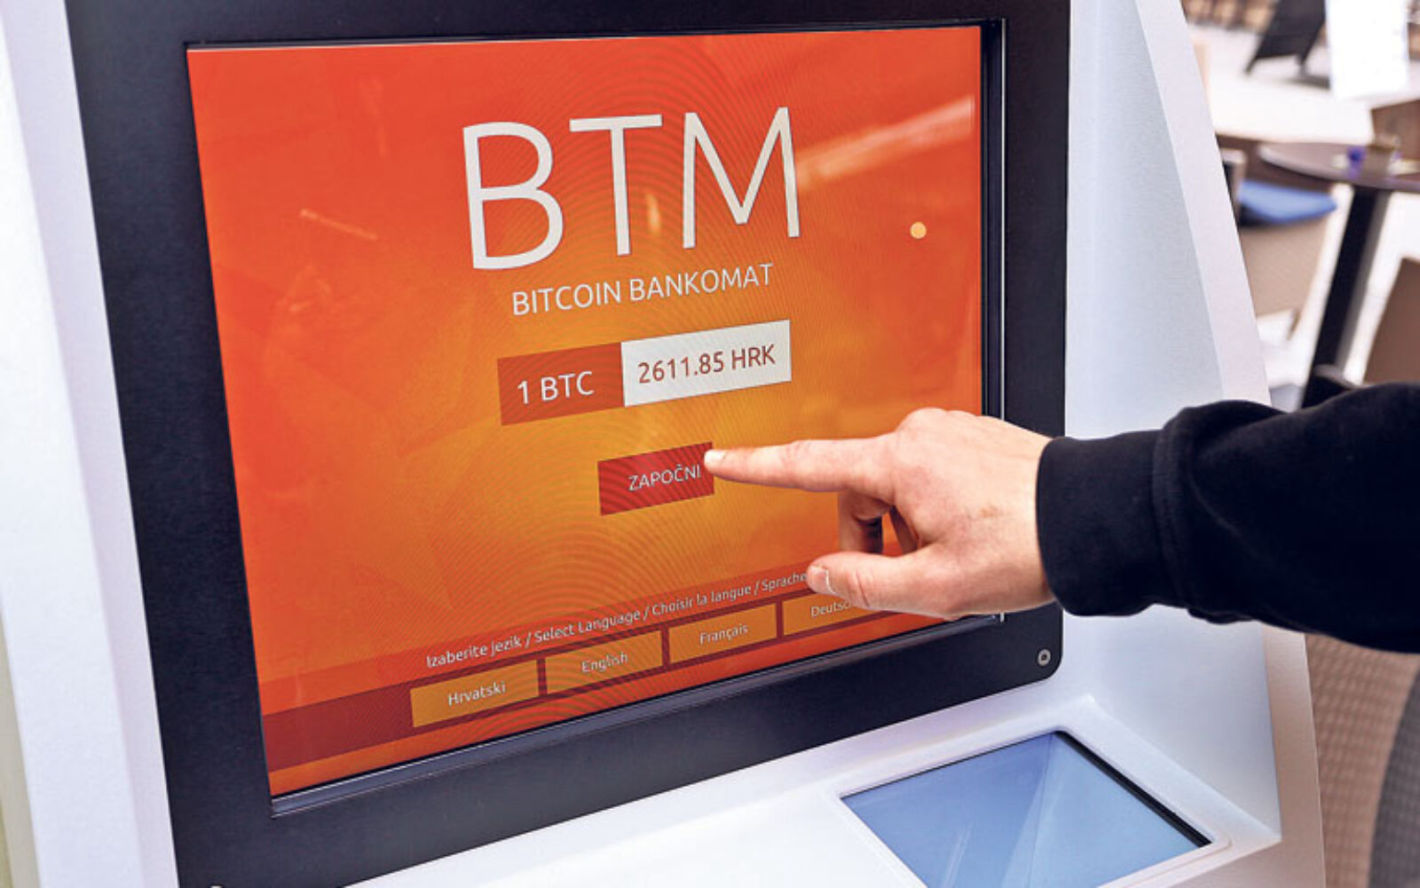 kupovina bitcoina na BTM bankomatu